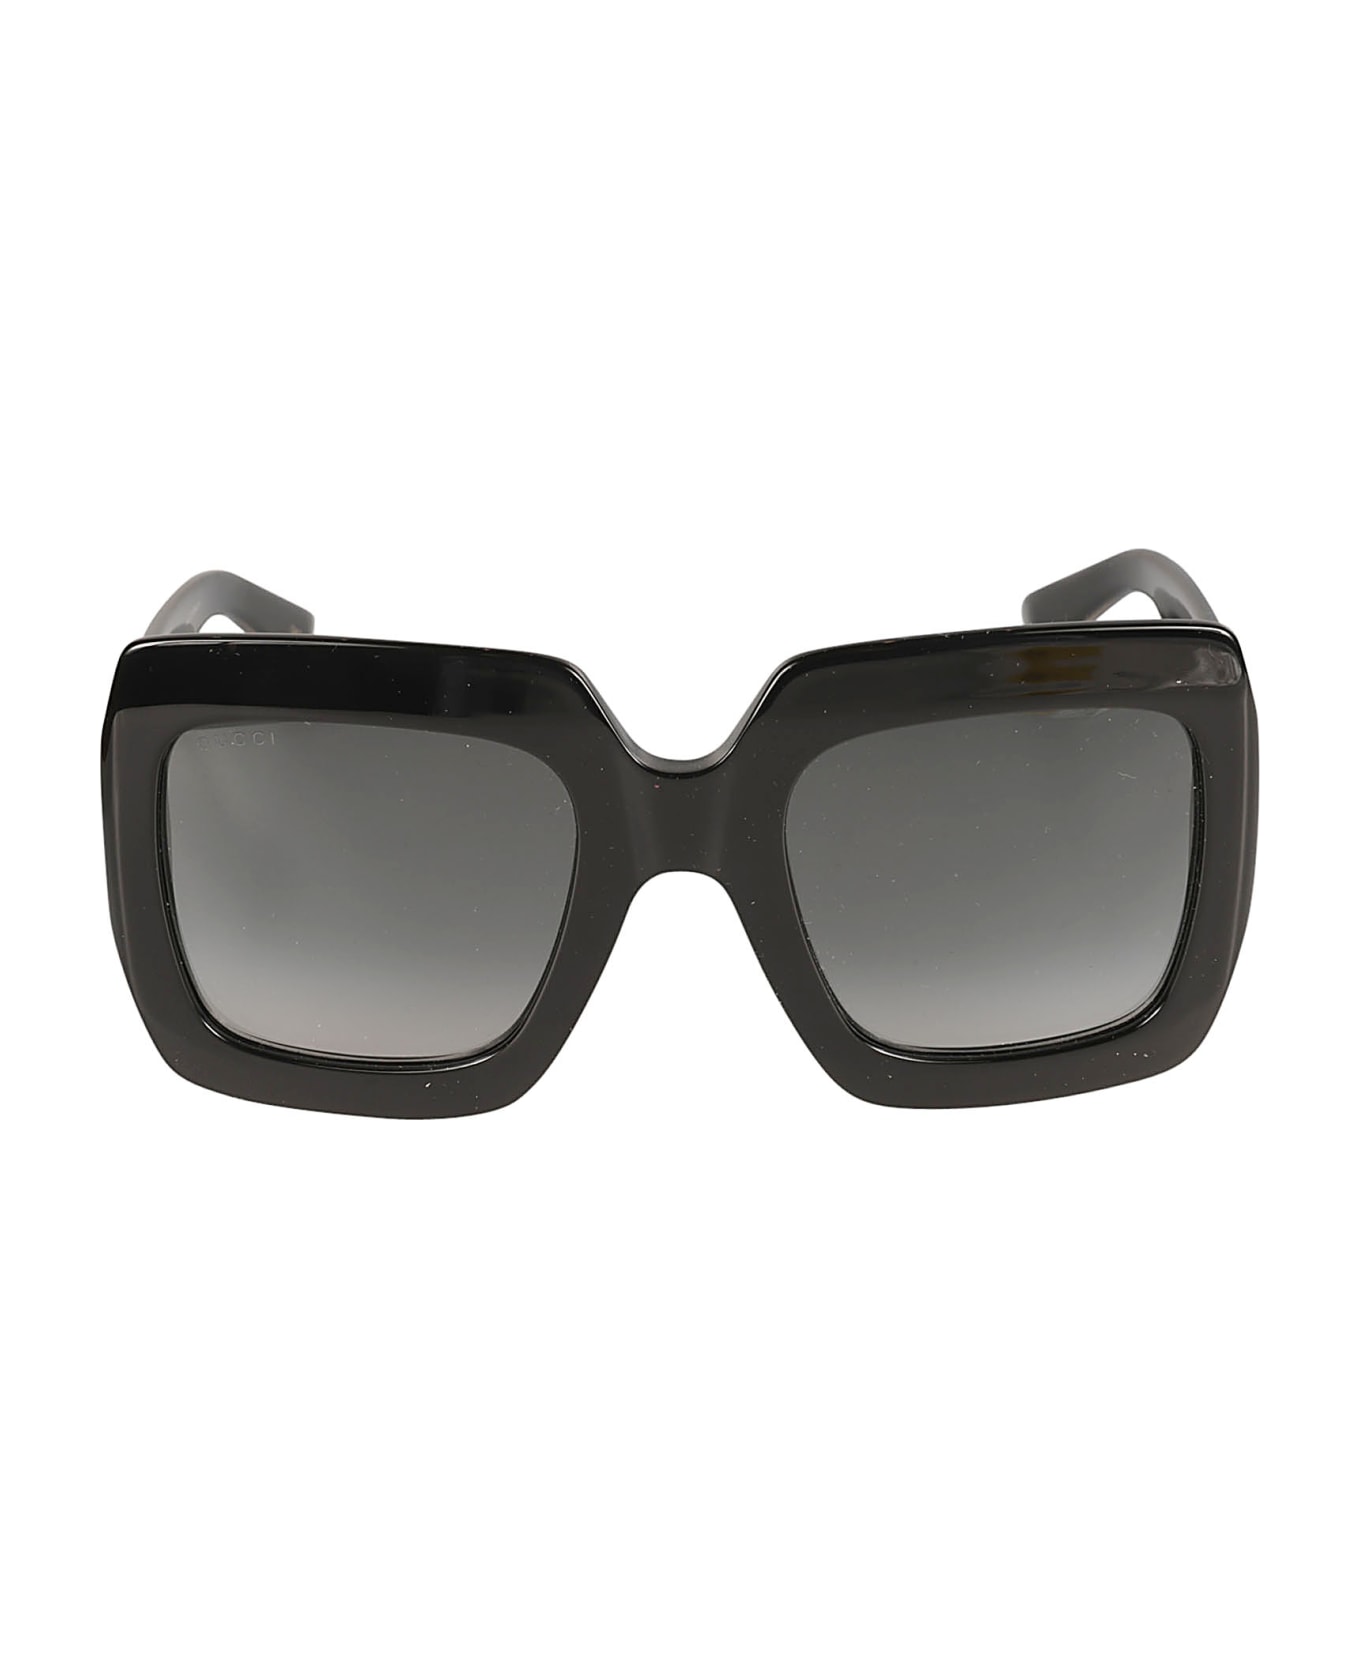 Gucci Eyewear Square Frame Sunglasses - Black/Grey